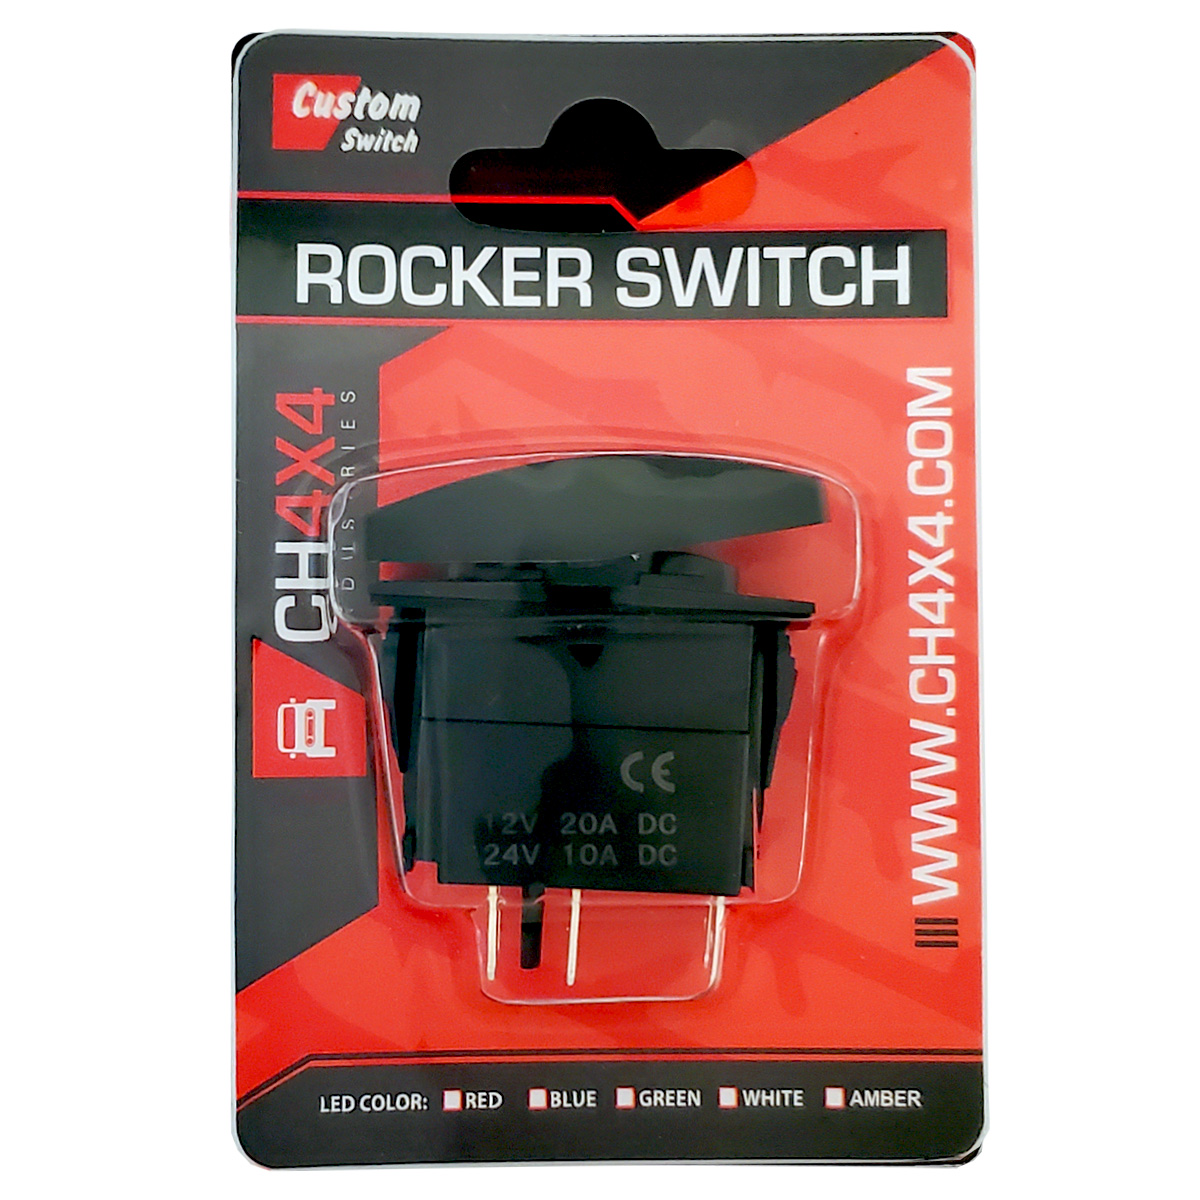 CH4X4 Rocker Switch Sasquatch Lights Symbol